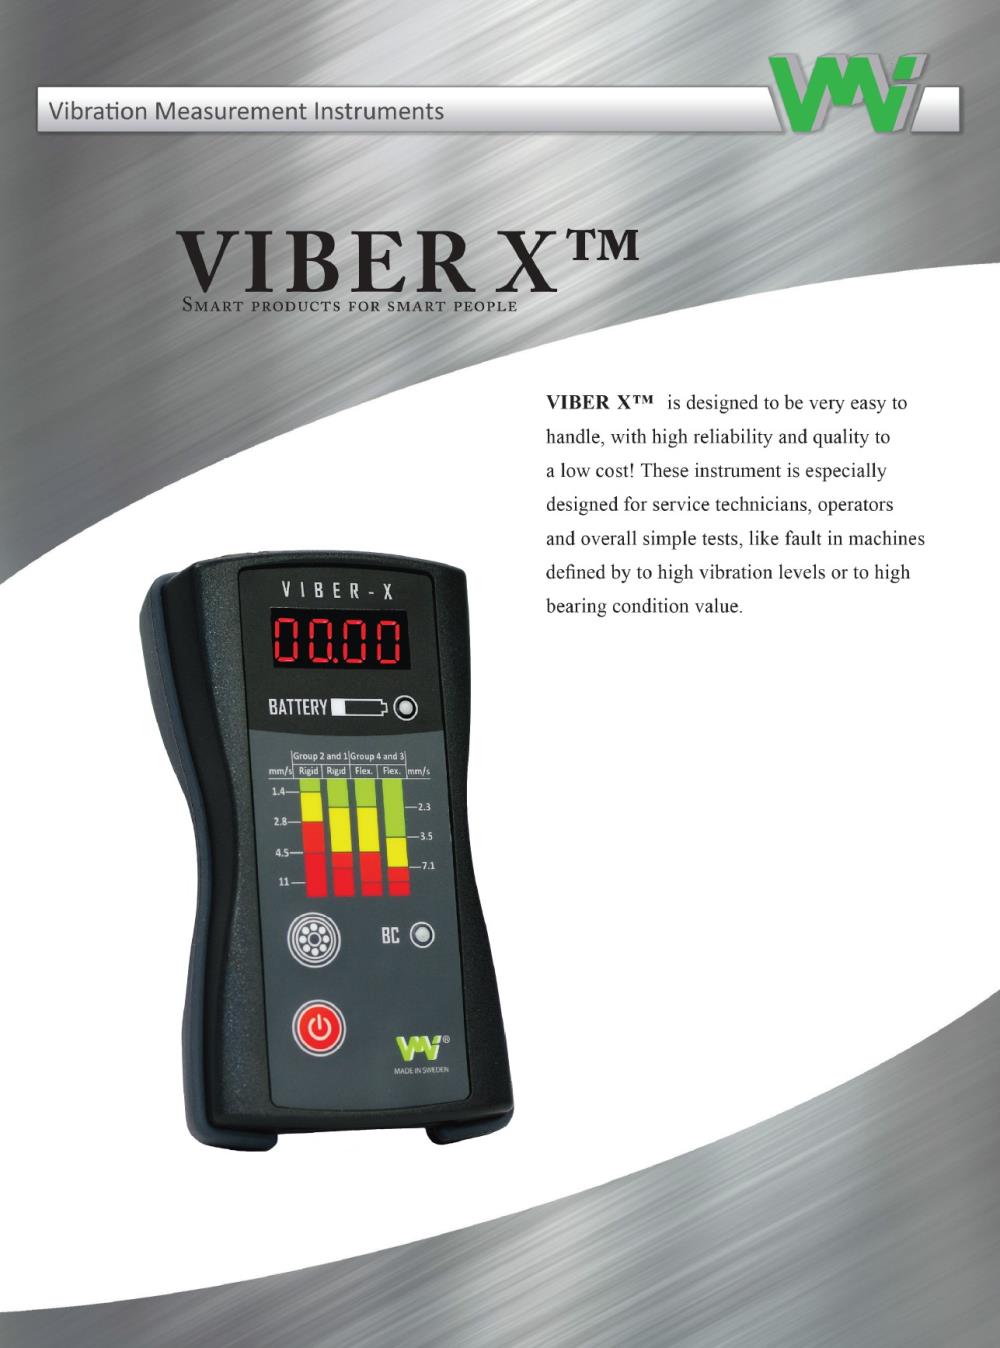 Vibration Meter, VIBER X, Brand : VMI International AB,#ขาย #จำหน่าย #viber #viberx #vibrationmeter #vibration #vmi #eec #dealer #distributor #ตัวแทนจำหน่าย #factory #industrial #นิคมอุตสาหกรรม #อุตสาหกรรม #สินค้าอุตสาหกรรม #โรงงาน #สิ่งแวดล้อม #environment #engineering #engineer #safety #จป #construction #รับเหมา #ก่อสร้าง #workicon #workicontech,,Instruments and Controls/Test Equipment/Vibration Meter